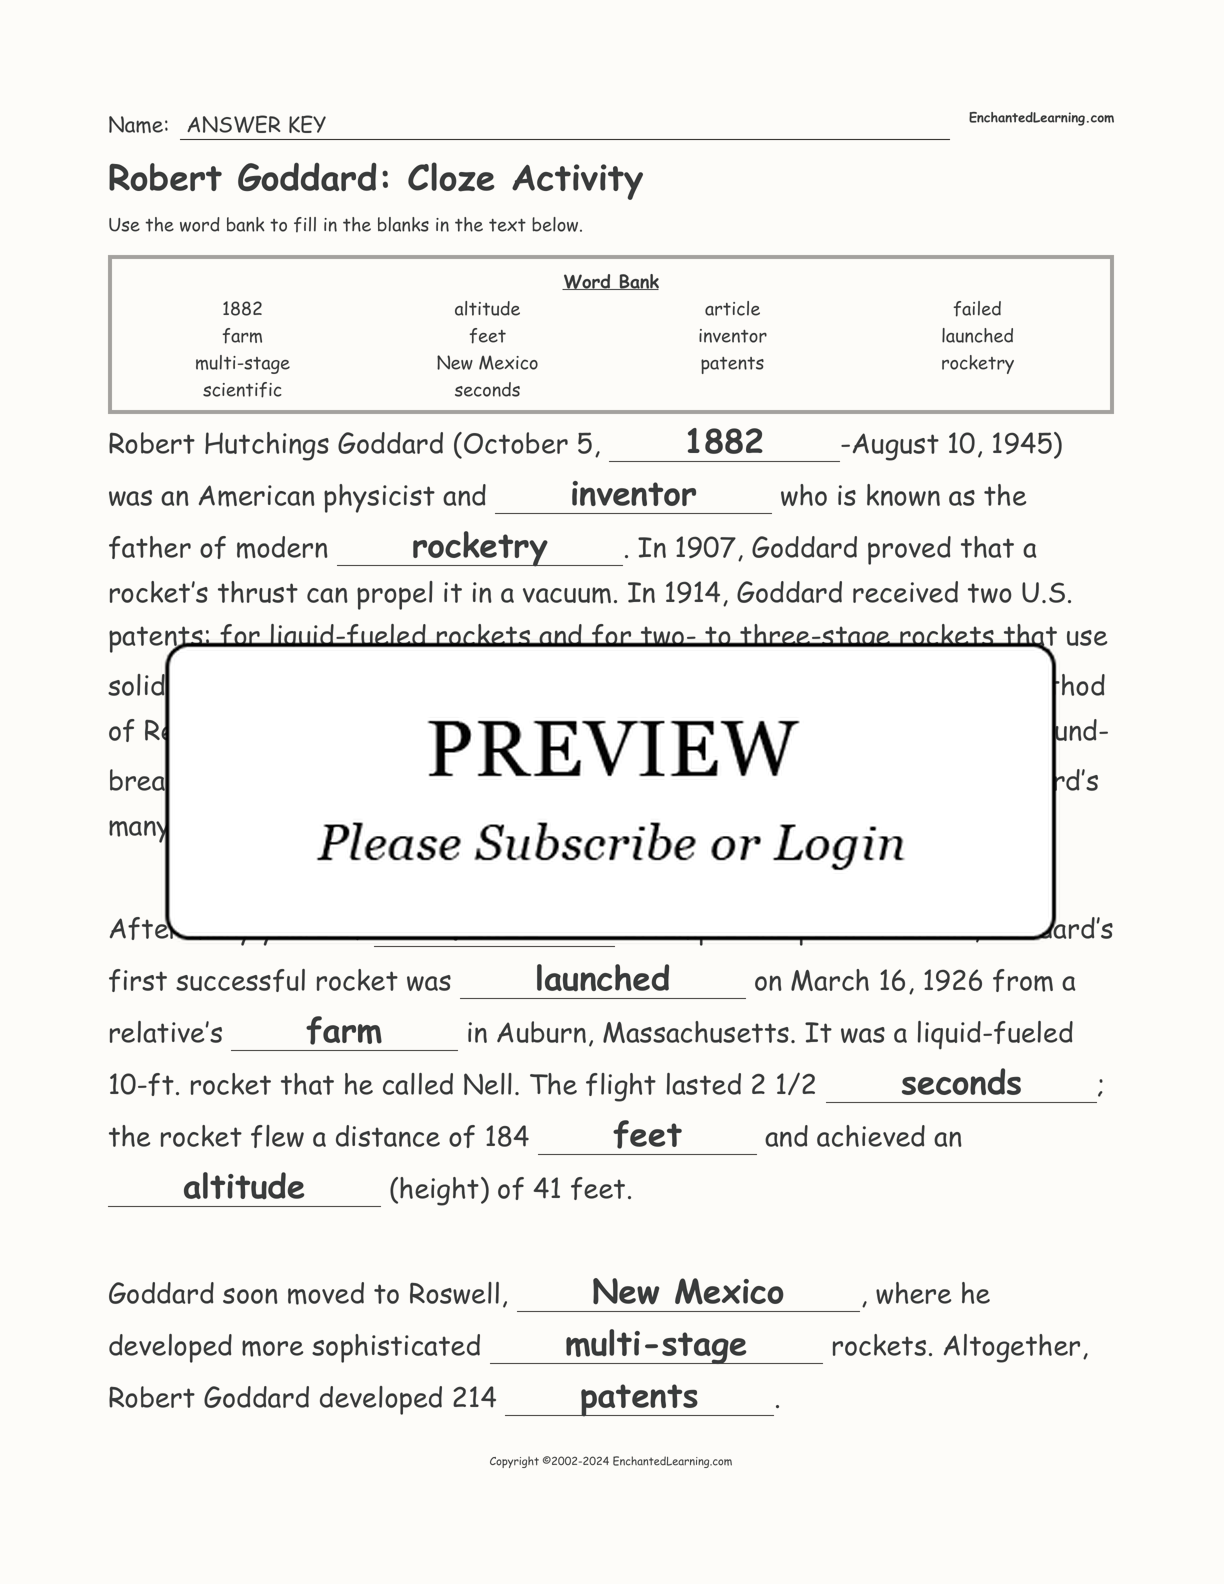 Robert Goddard: Cloze Activity interactive worksheet page 2